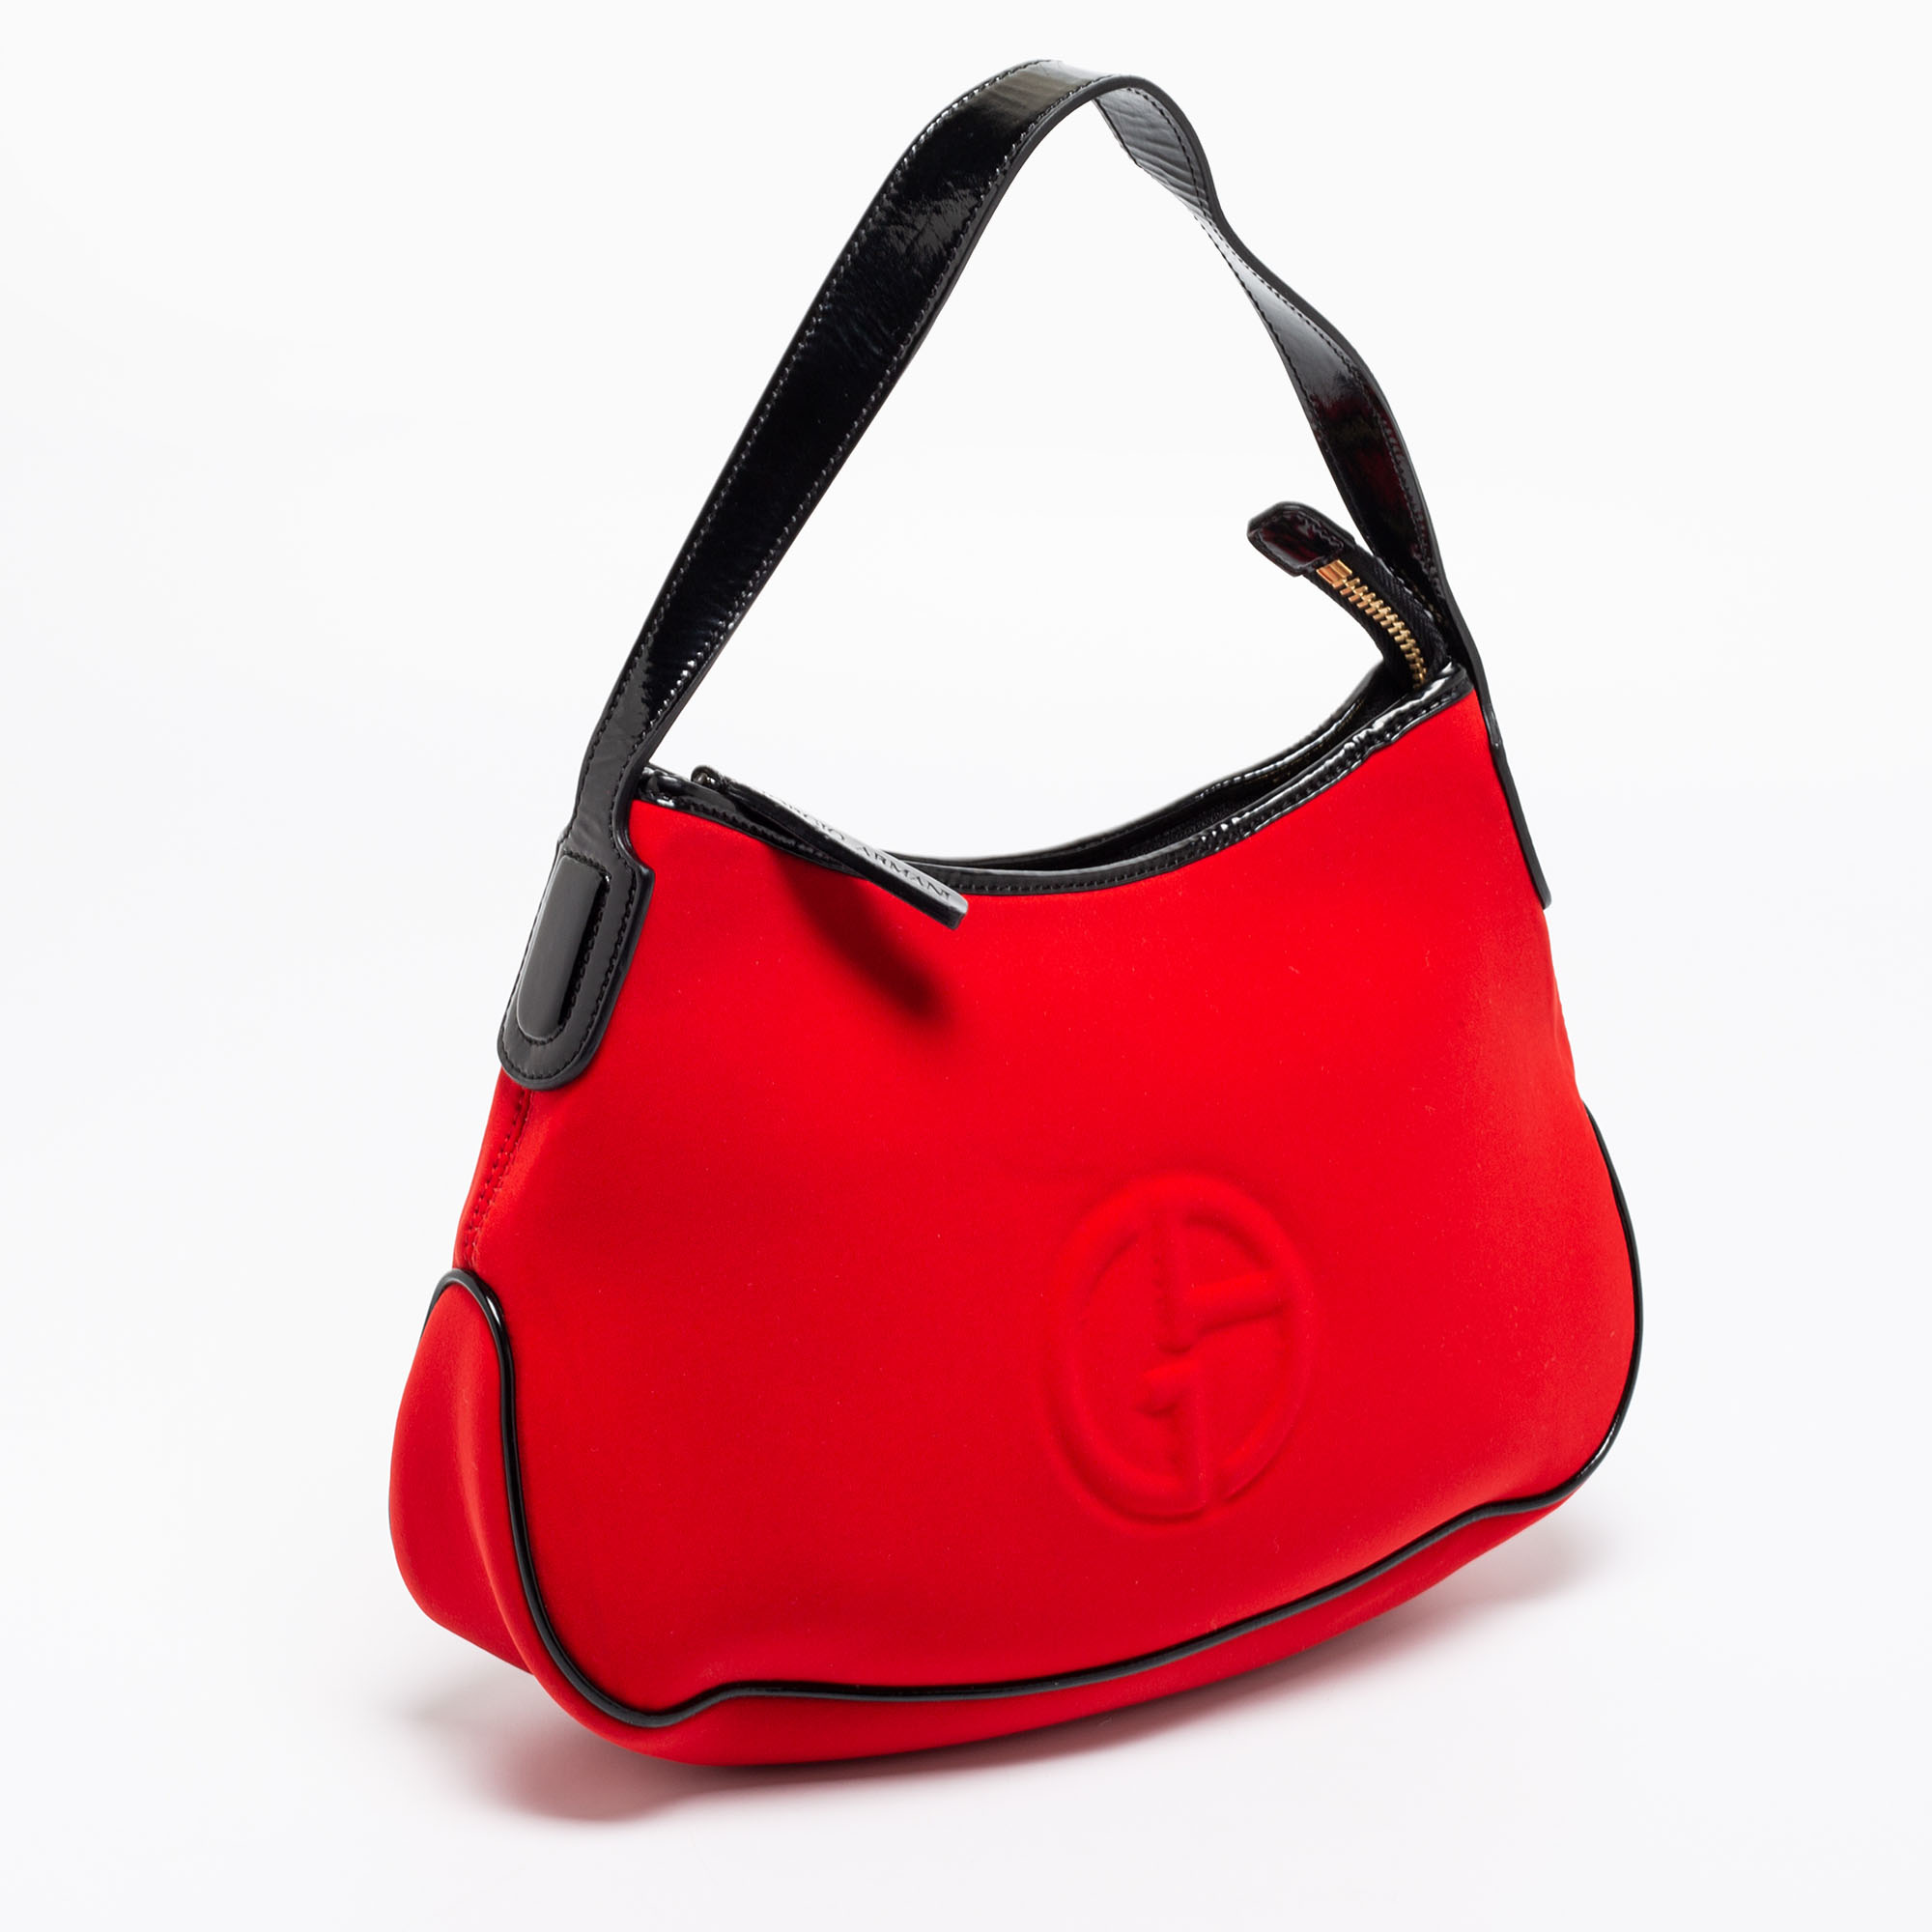 Giorgio Armani Red Neoprene And Patent Leather Hobo Bag